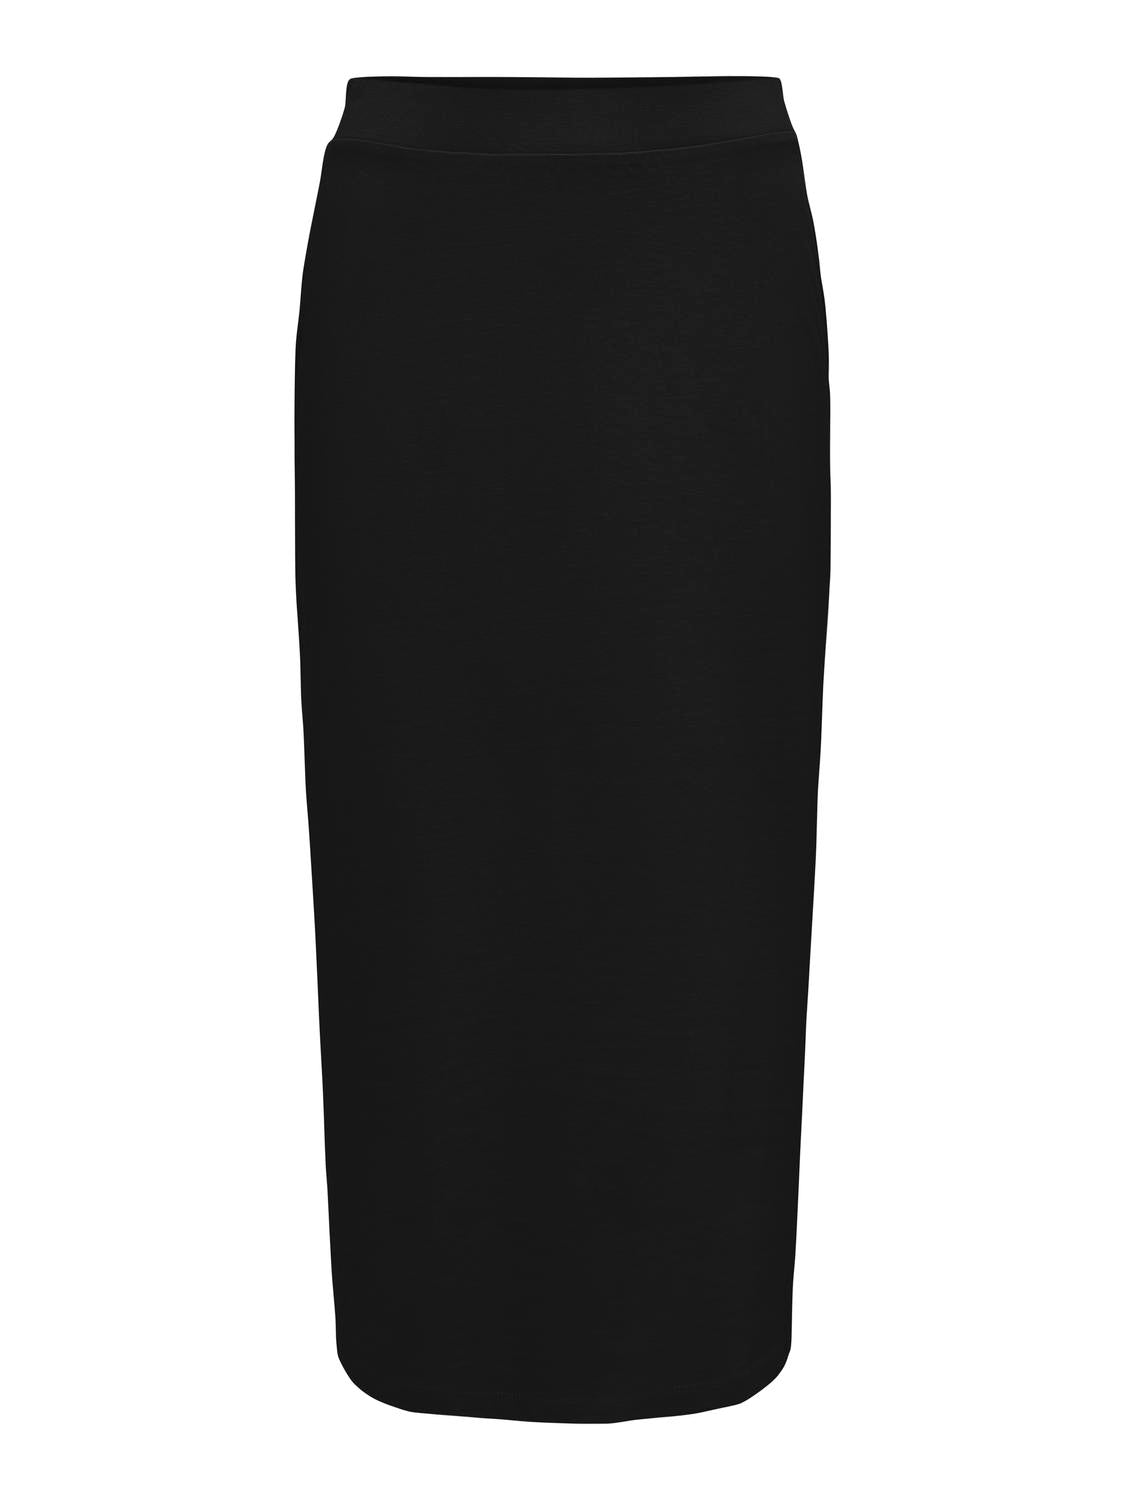 Loungewear Skirt Black